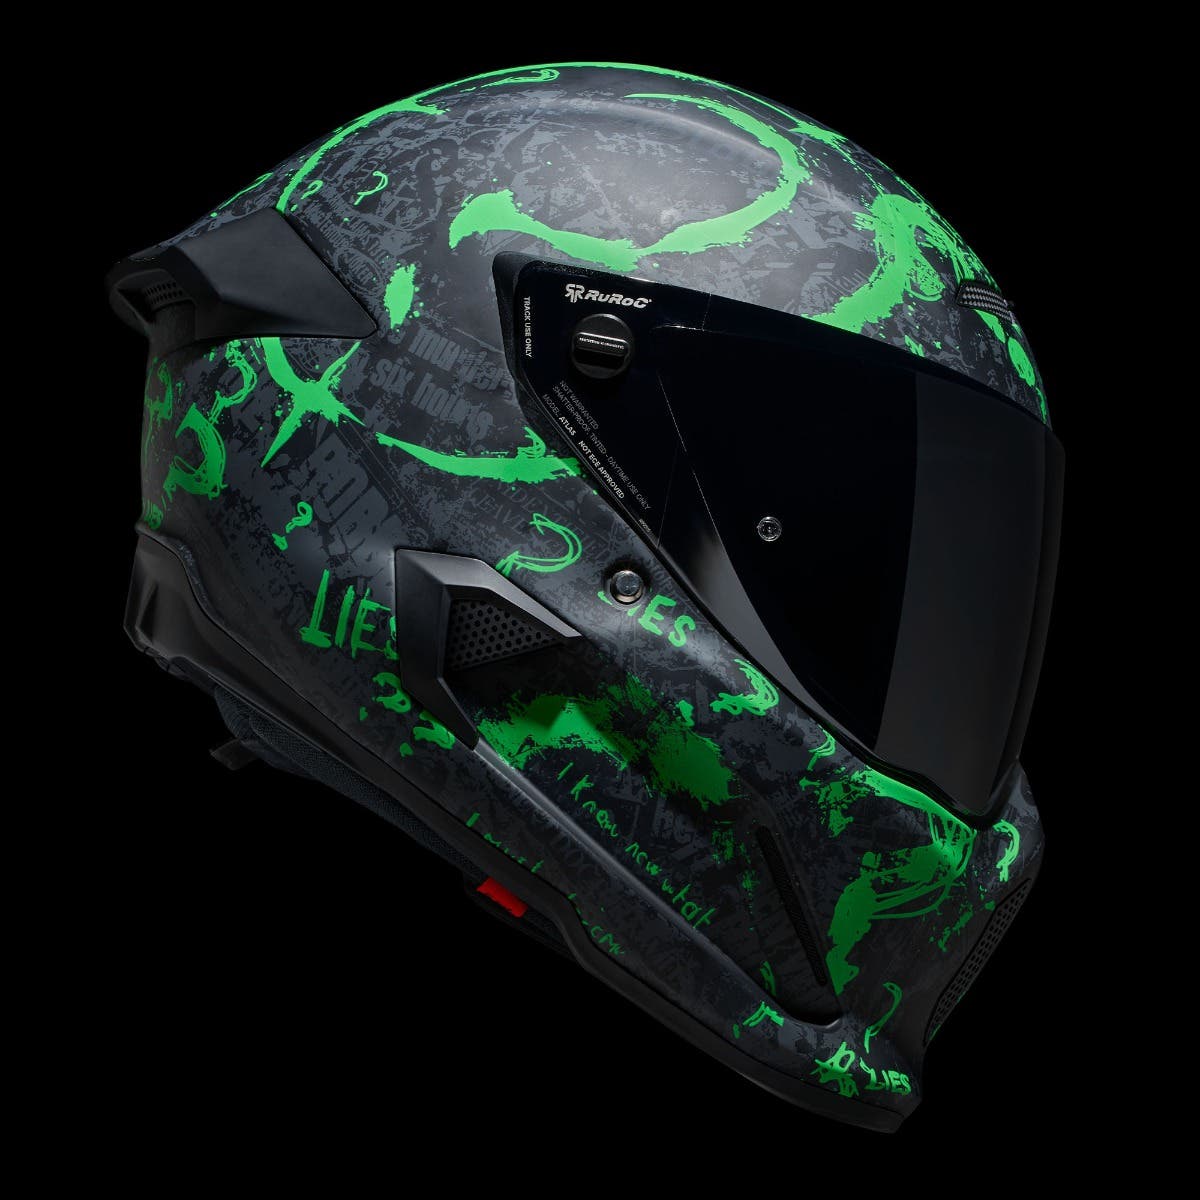 ATLAS 4.0 The Riddler - Motorcycle Helmet - Ruroc